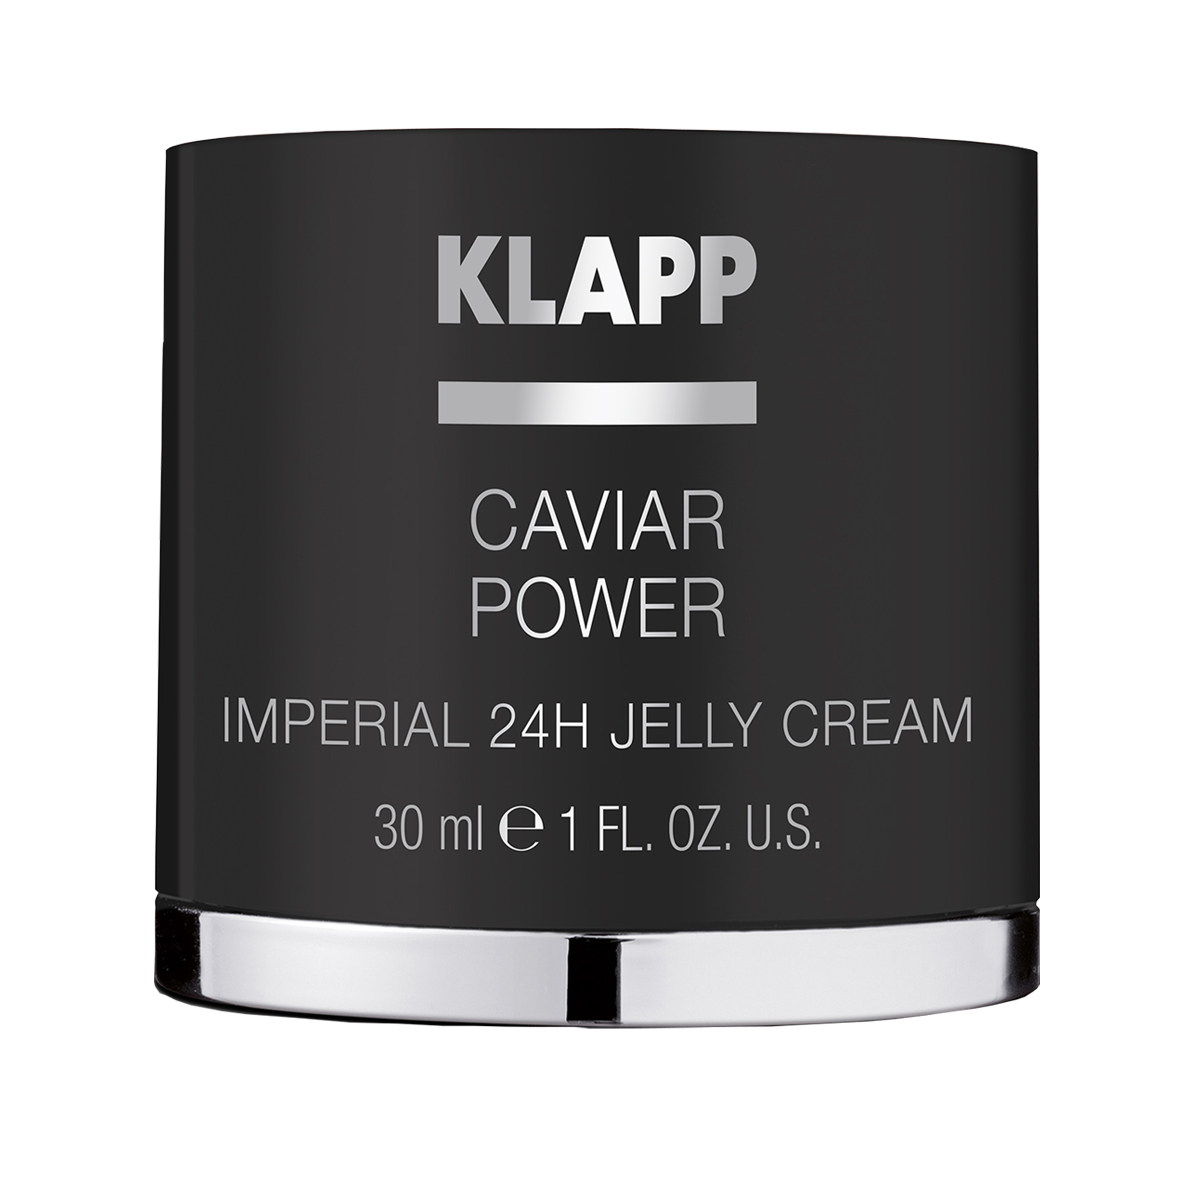 KLAPP Caviar Power Imperial 24H Jelly Cream 30 ml